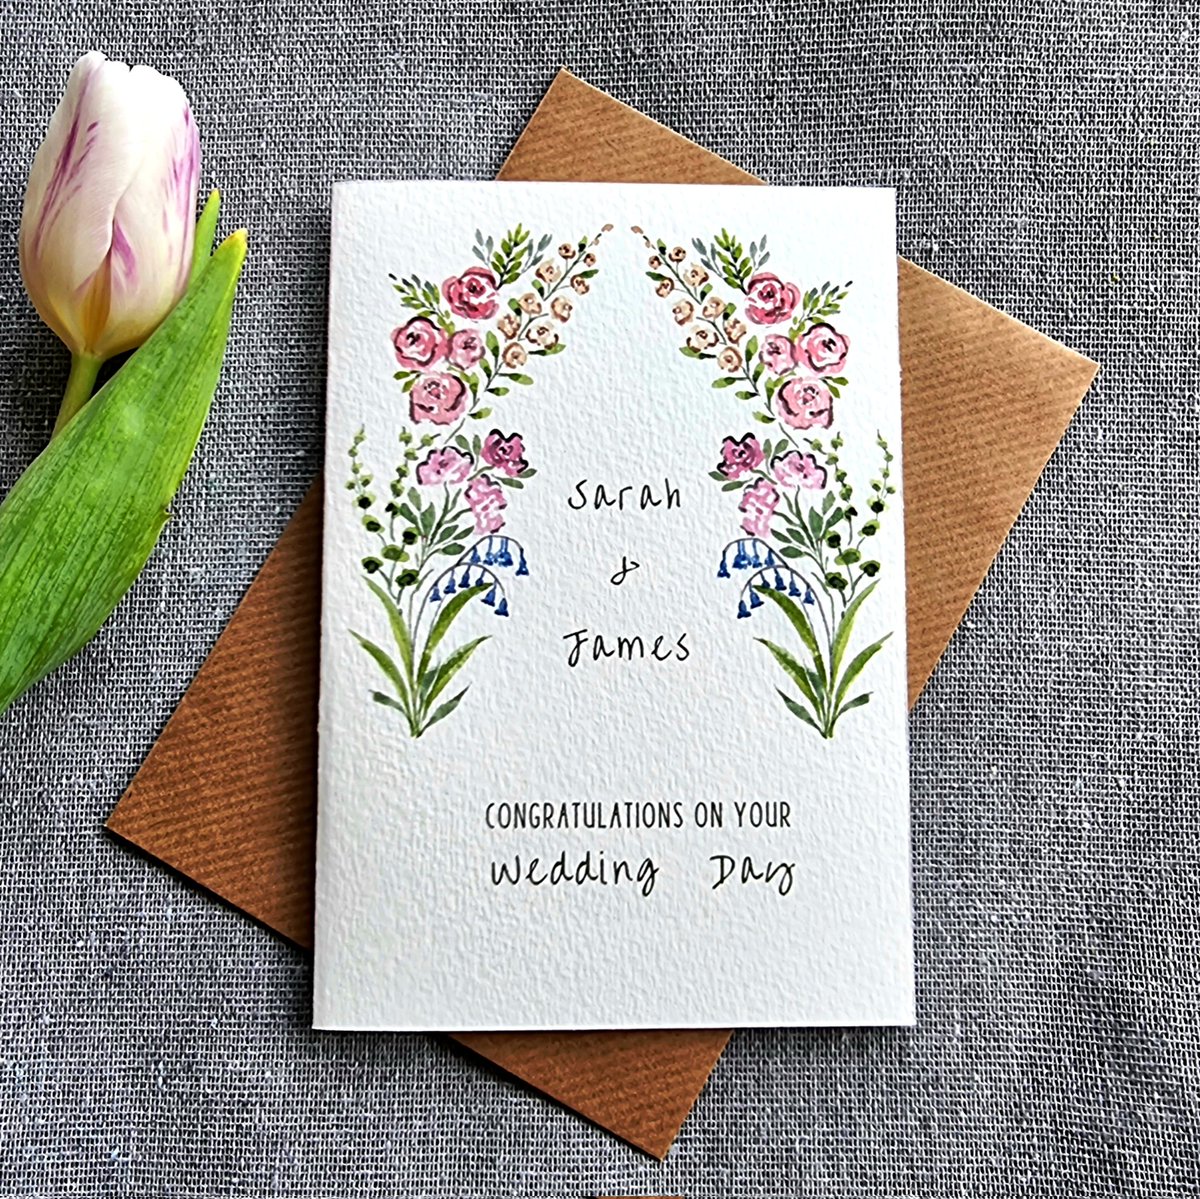 Love is on the air 🥰Personalising many wedding cards this morning.

etsy.com/listing/142124…

#handmade #personalised #wedding #summerwedding #wednesdaythought #greetingcard #elevenseshour @elevenseshour_ @BritishCrafting @Justacard1 #plasticfree